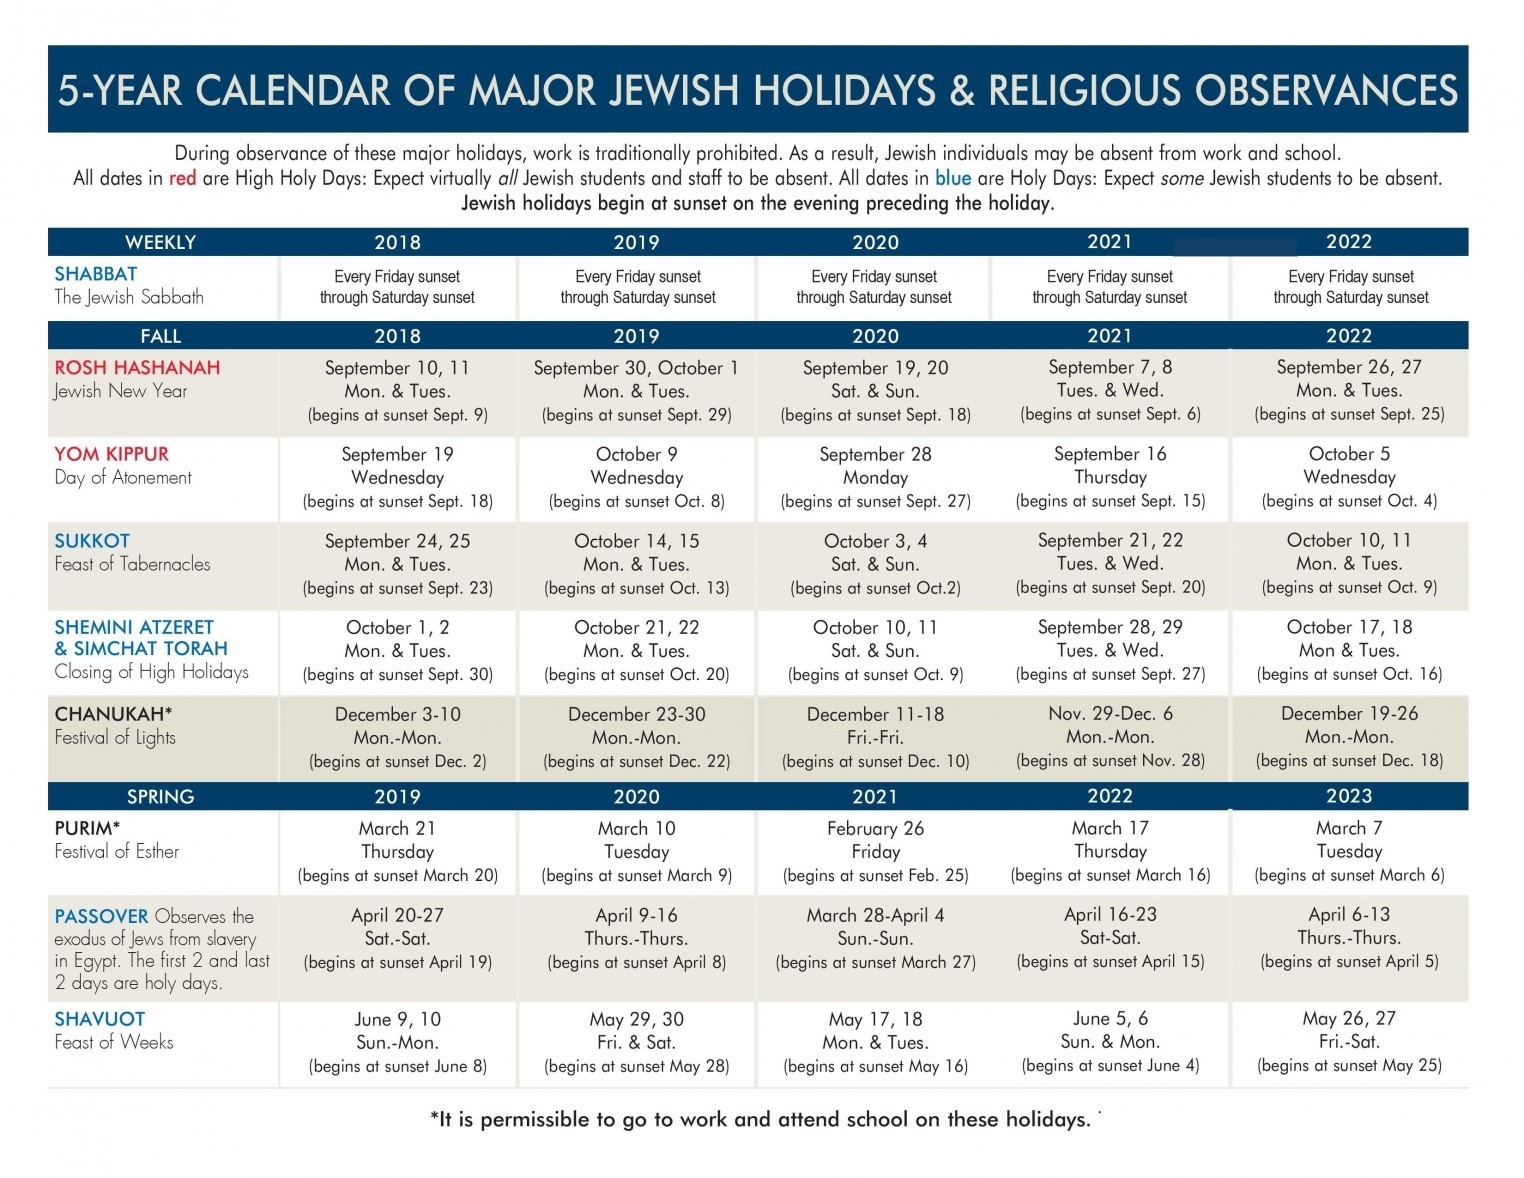 5-Year Jewish Holiday Calendar | Jewish Federation Of-Jewish Calnedar Wtih Holidays 2020